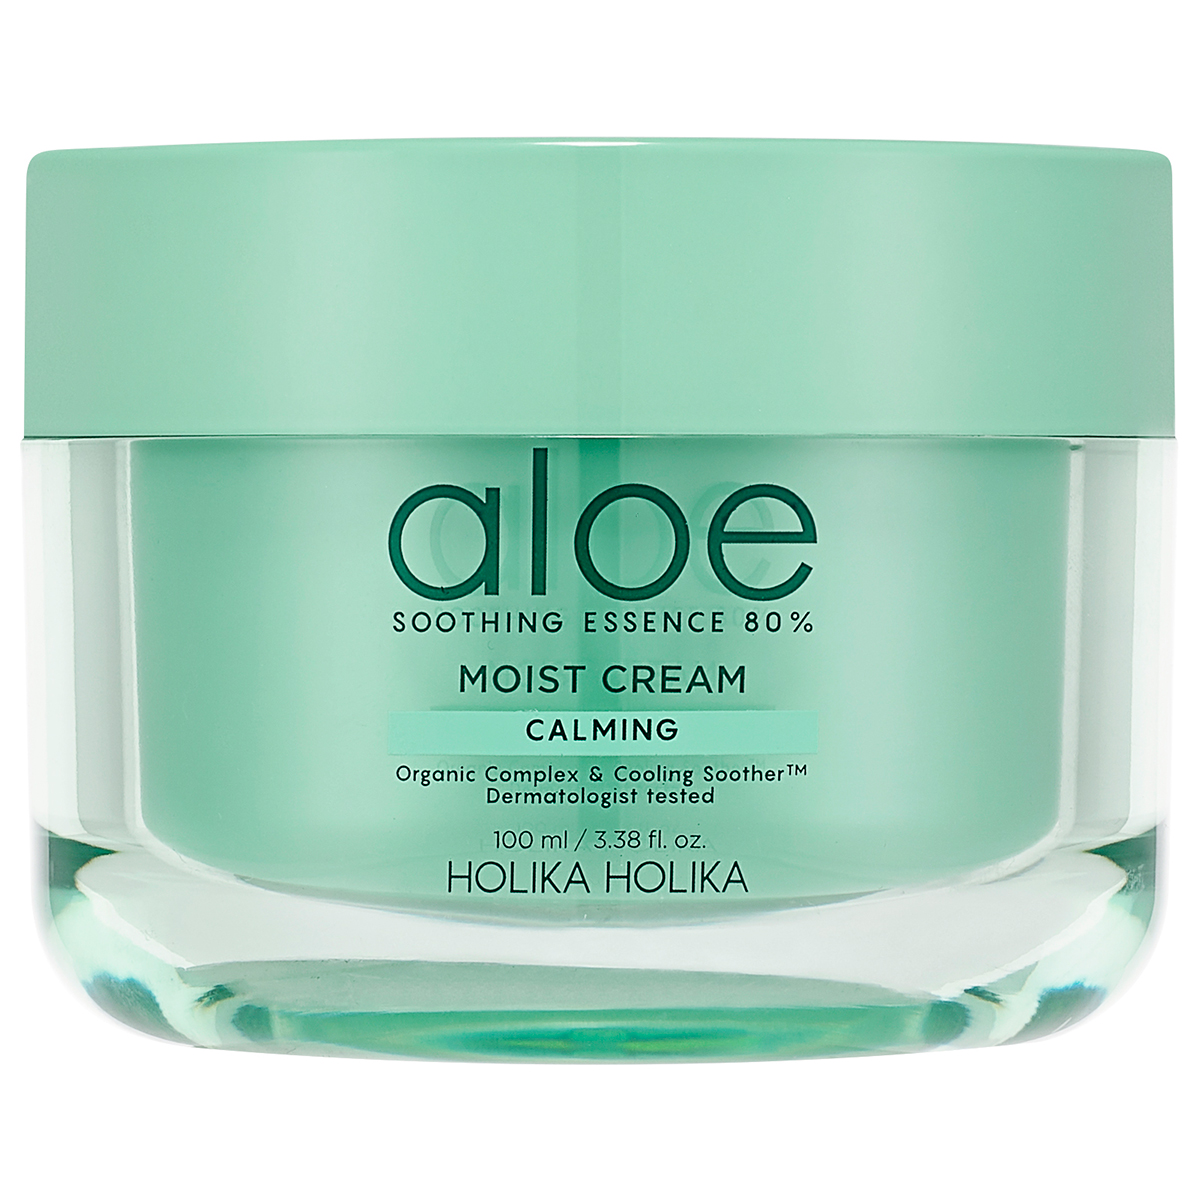 Aloe Soothing Essence 80% Moist Cream, 100 ml Holika Holika K-Beauty Hudpleie - K-Beauty